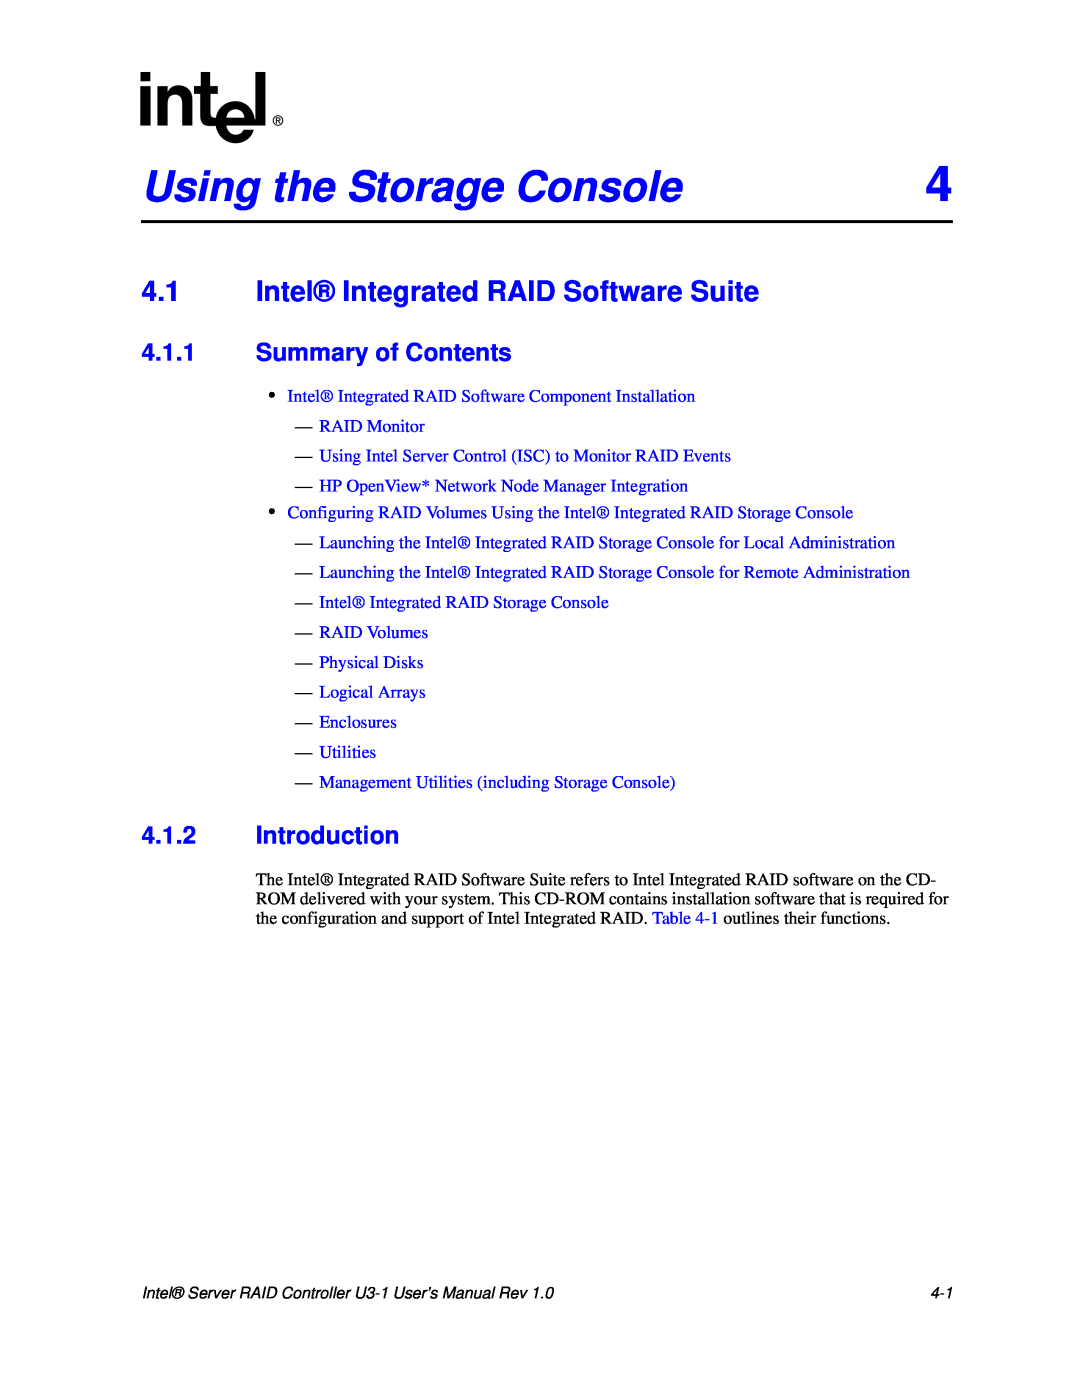 Intel SRCU31 user manual Using the Storage Console, 4.1Intel Integrated RAID Software Suite 